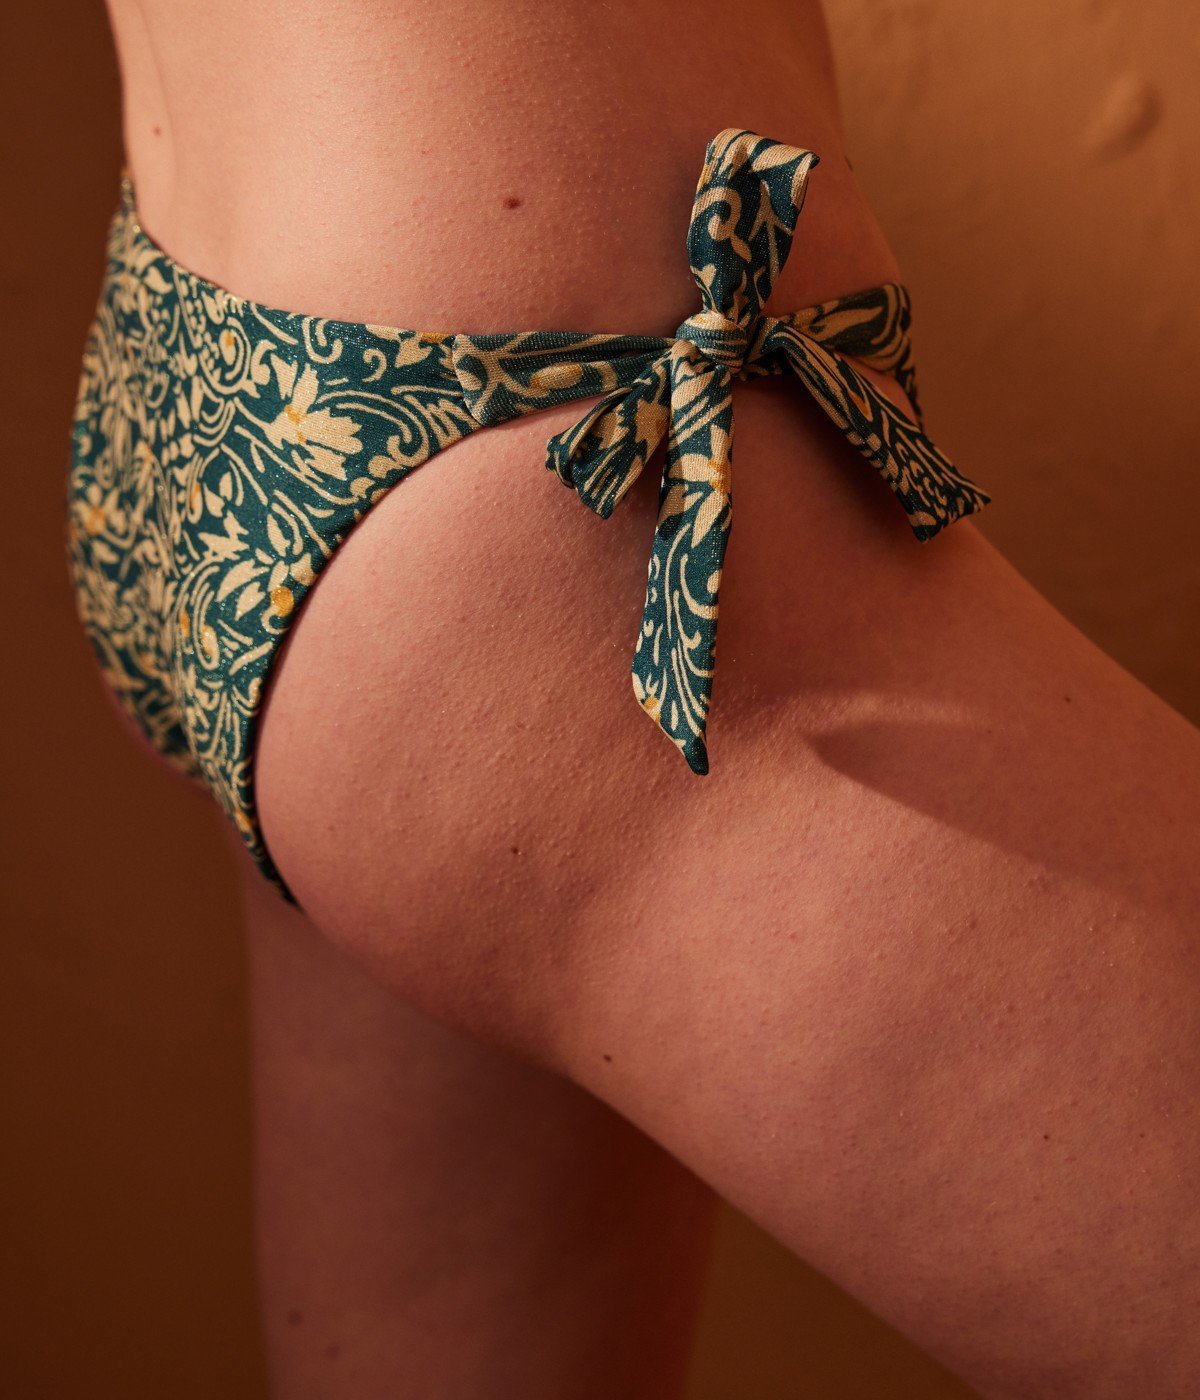 Elegant Brazilian Bikini Bottom